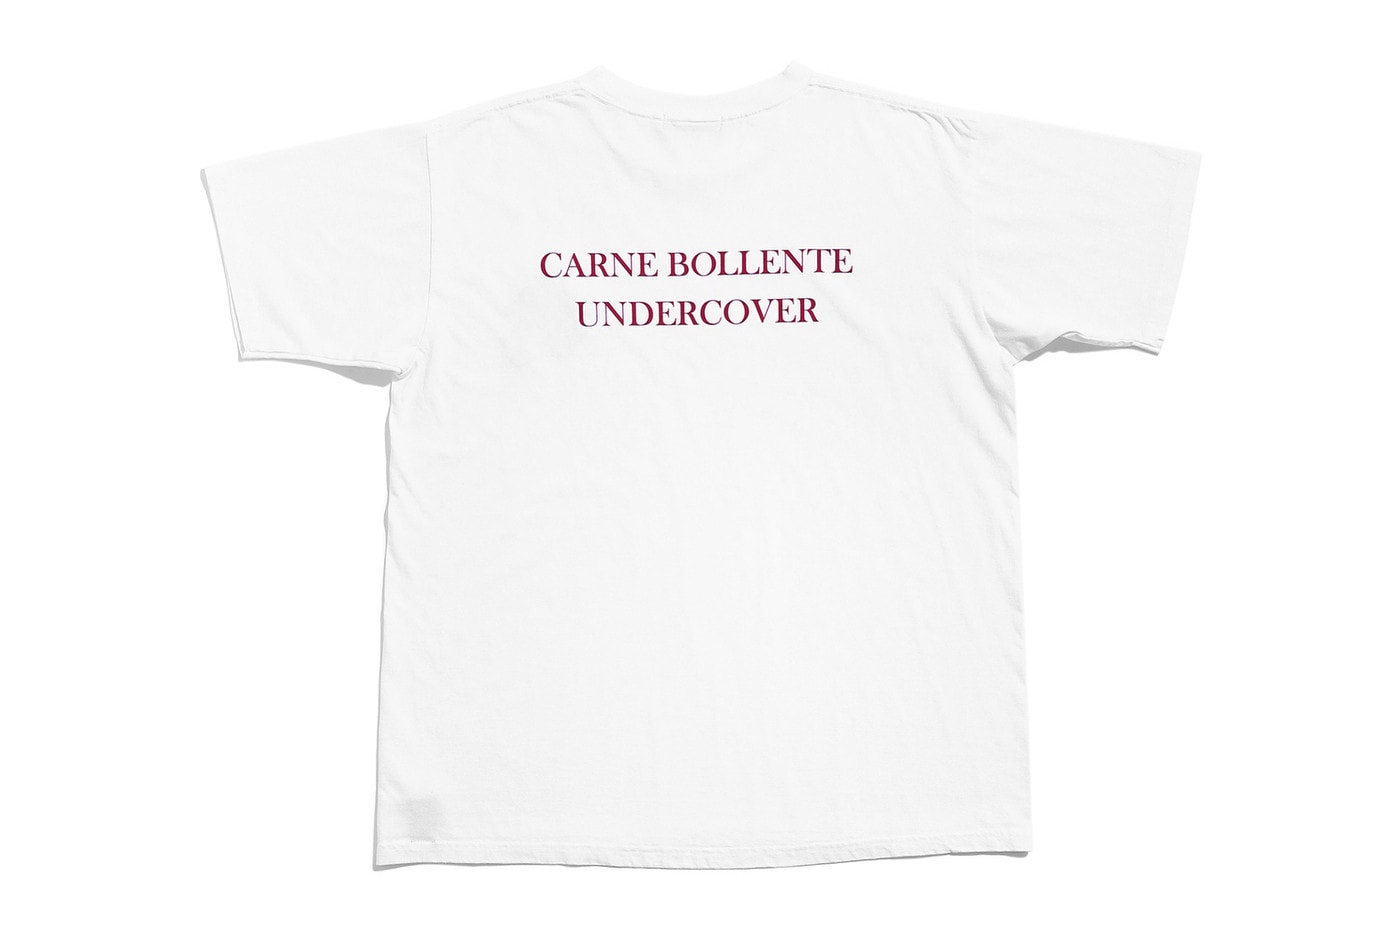 UNDERCOVER x Carne Bollente 聯名系列上架